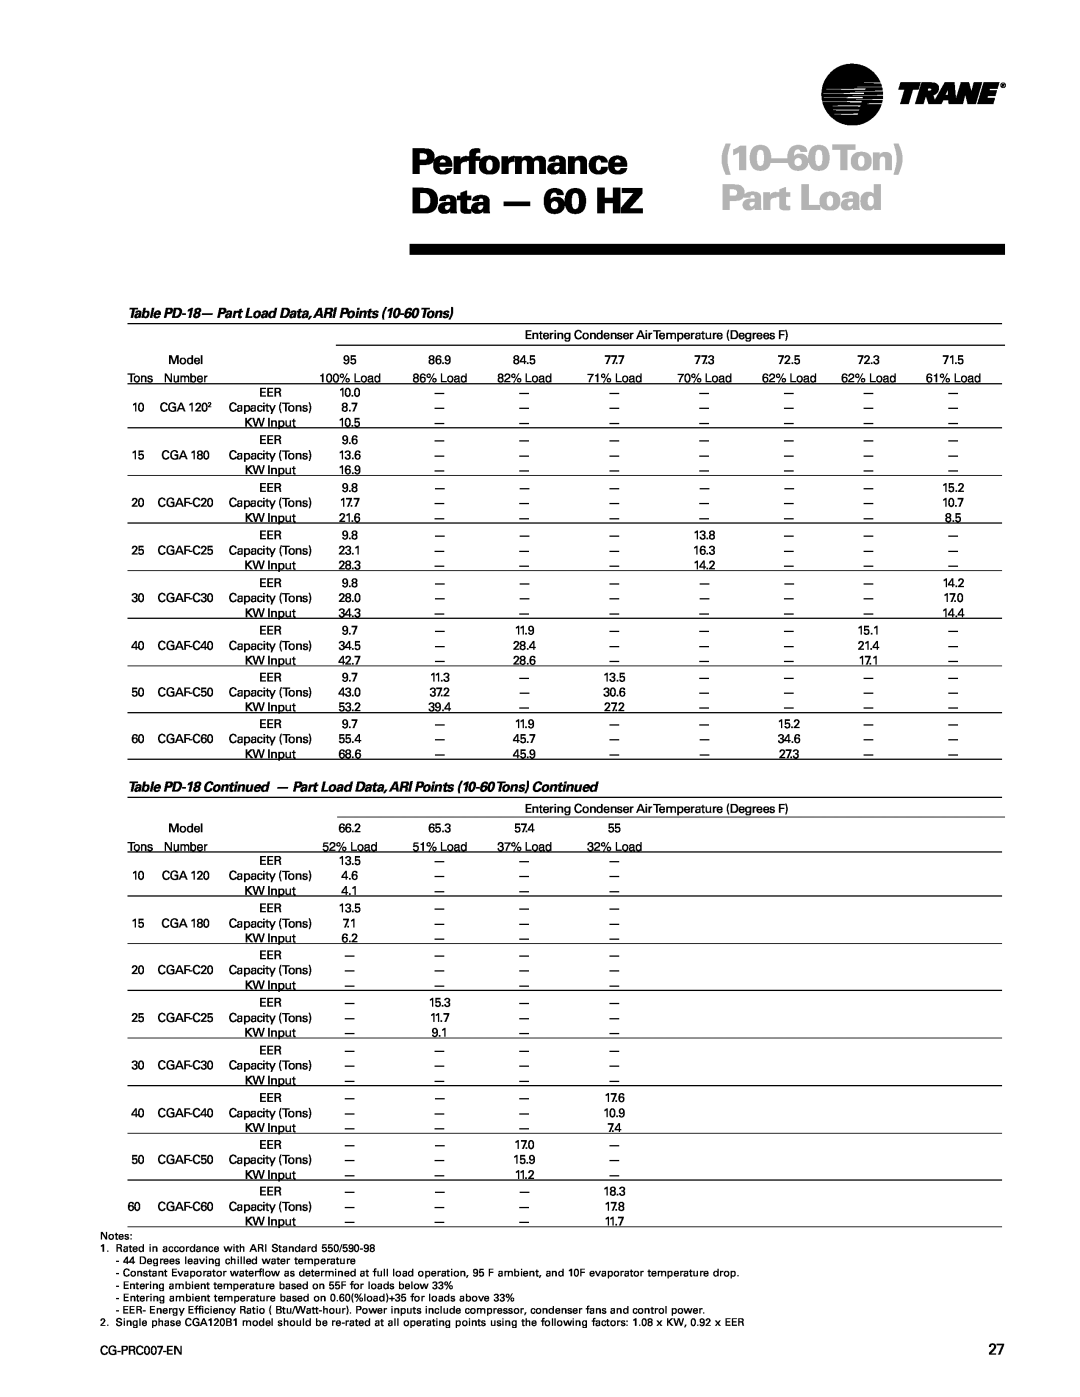 Trane CG-PRC007-EN manual Performance, Data - 60 HZ, Table PD-18-Part Load Data,ARI Points 10-60Tons 